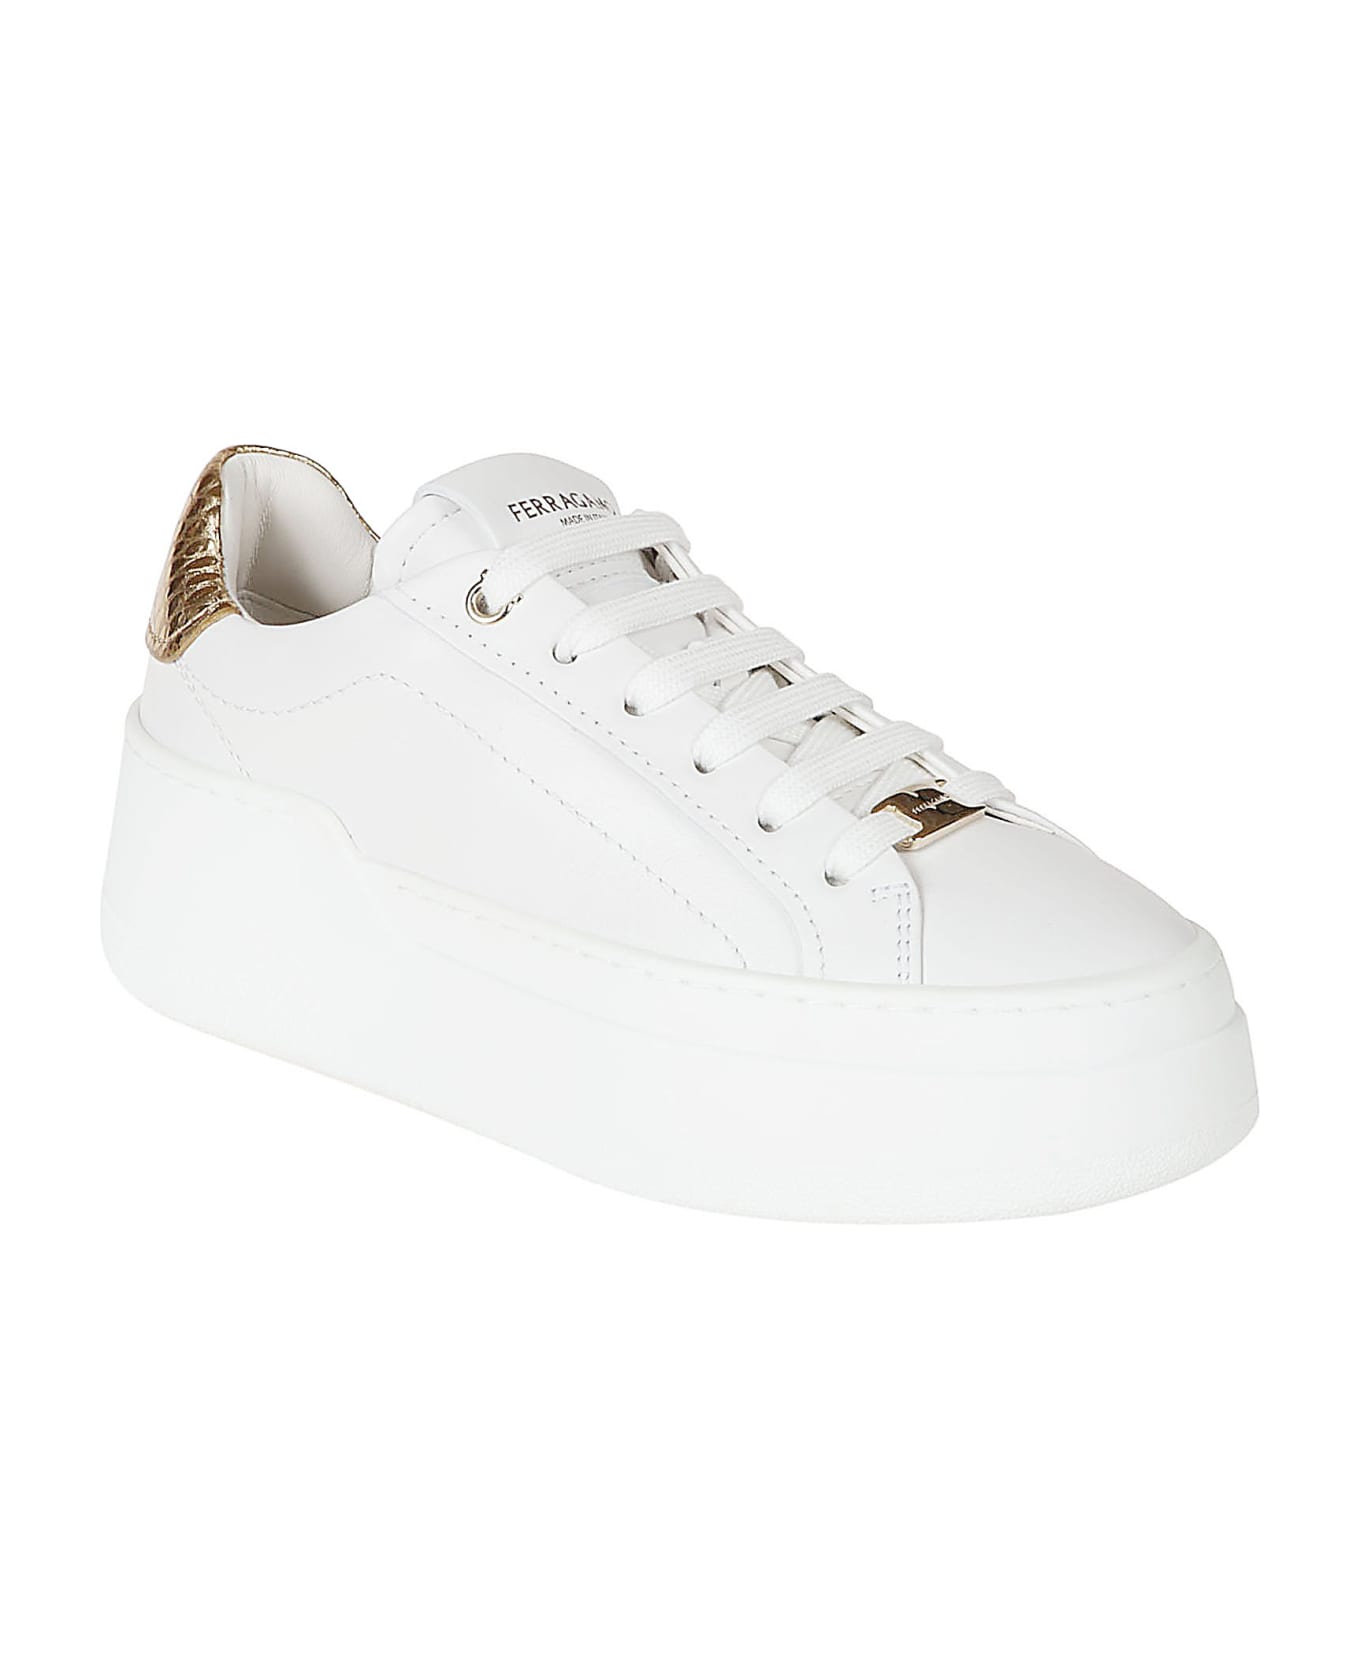 Ferragamo Dahlia 1 Sneakers - White/Gold